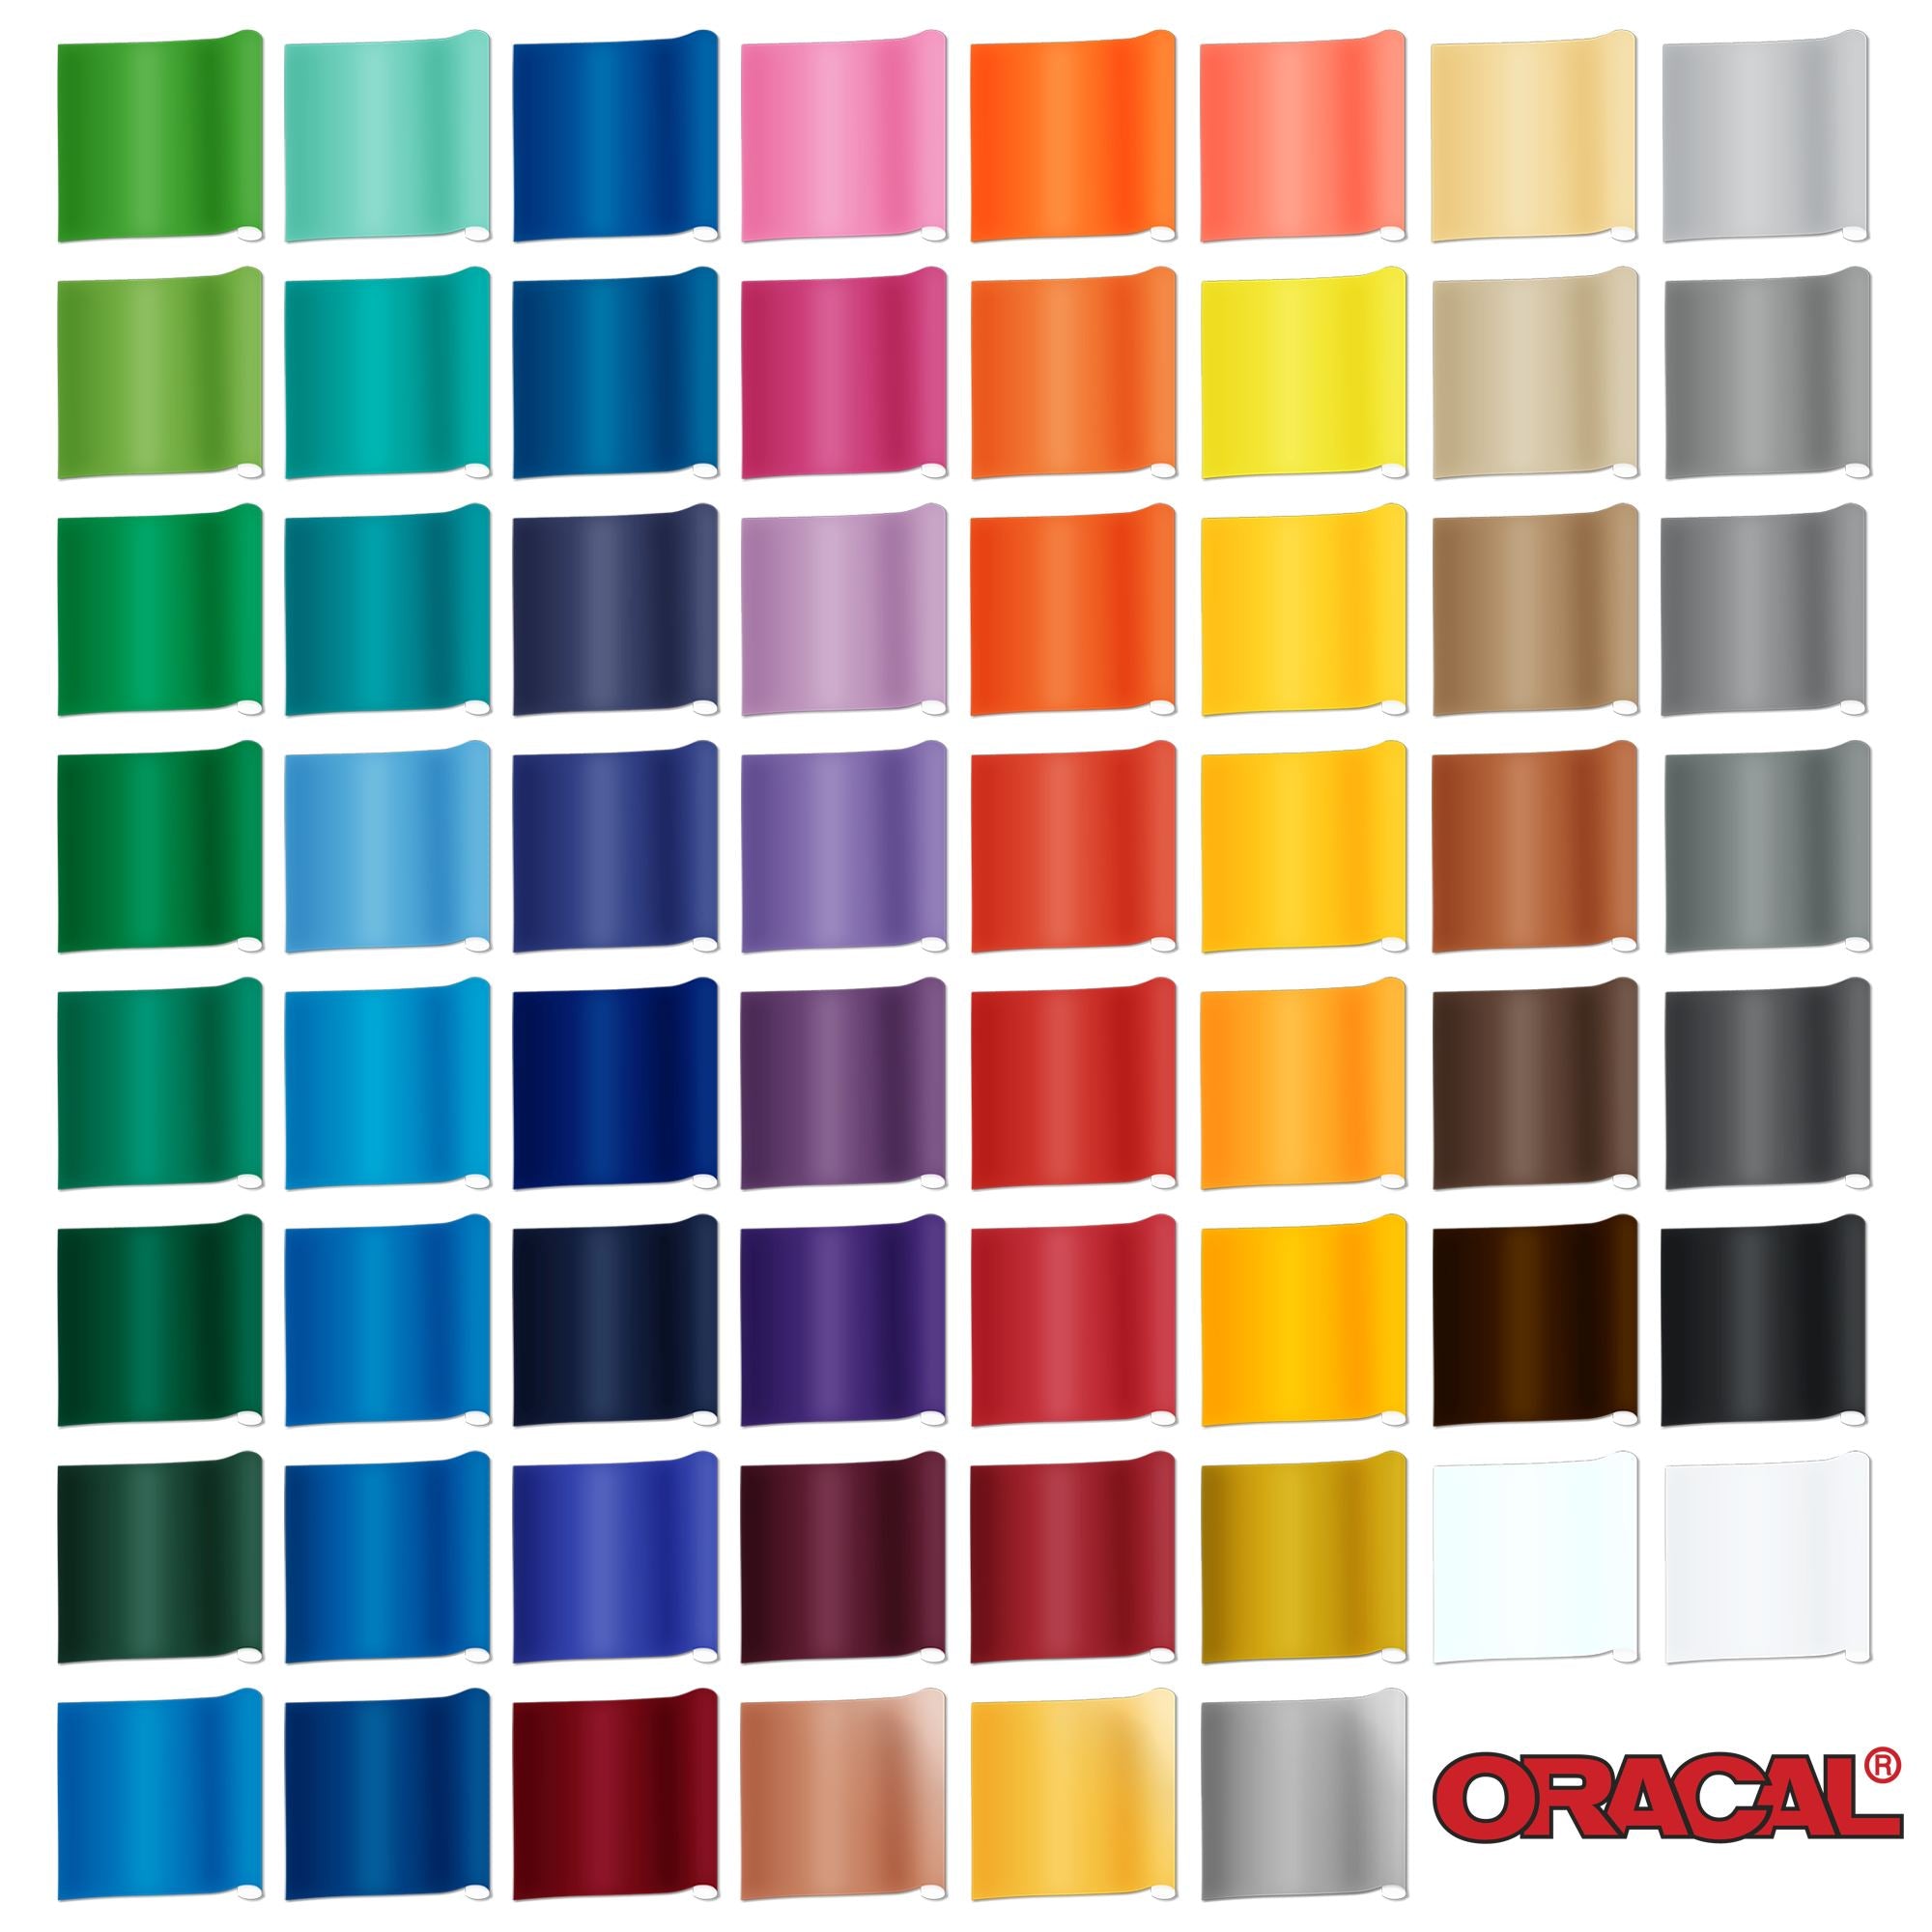 Oracal 651 Glossy Adhesive Vinyl Sheets 12 x 12 - 10 Sheet Pack